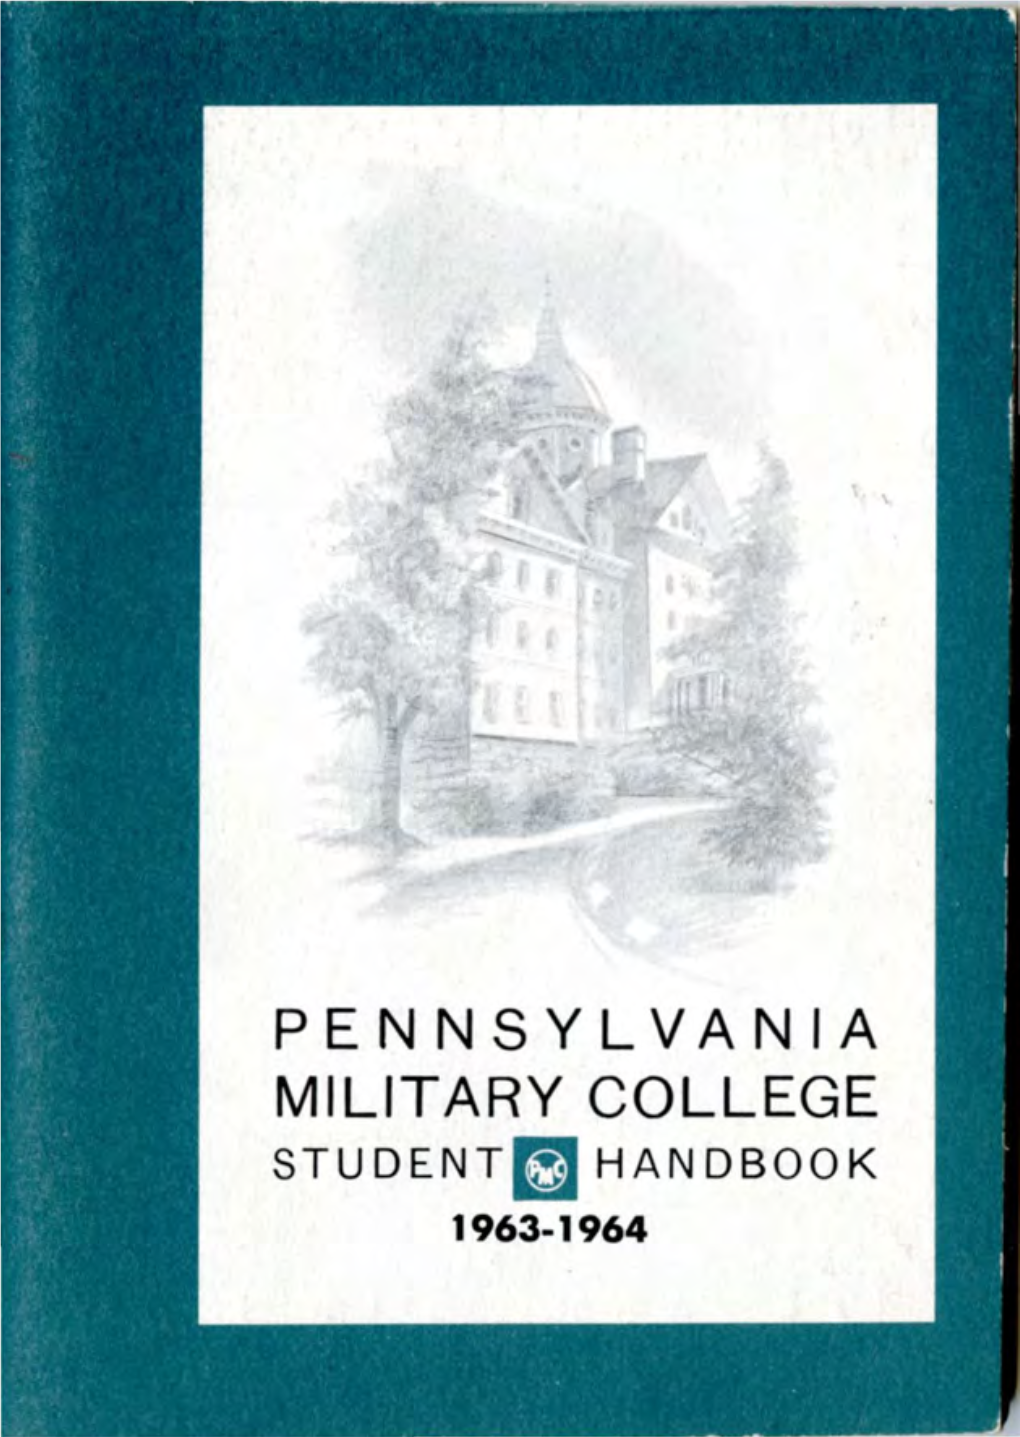 PENNSYLVANIA MILITARY COLLEGE STUDENT (~] HANDBOOK 1963-1964 Student HANDBOOK